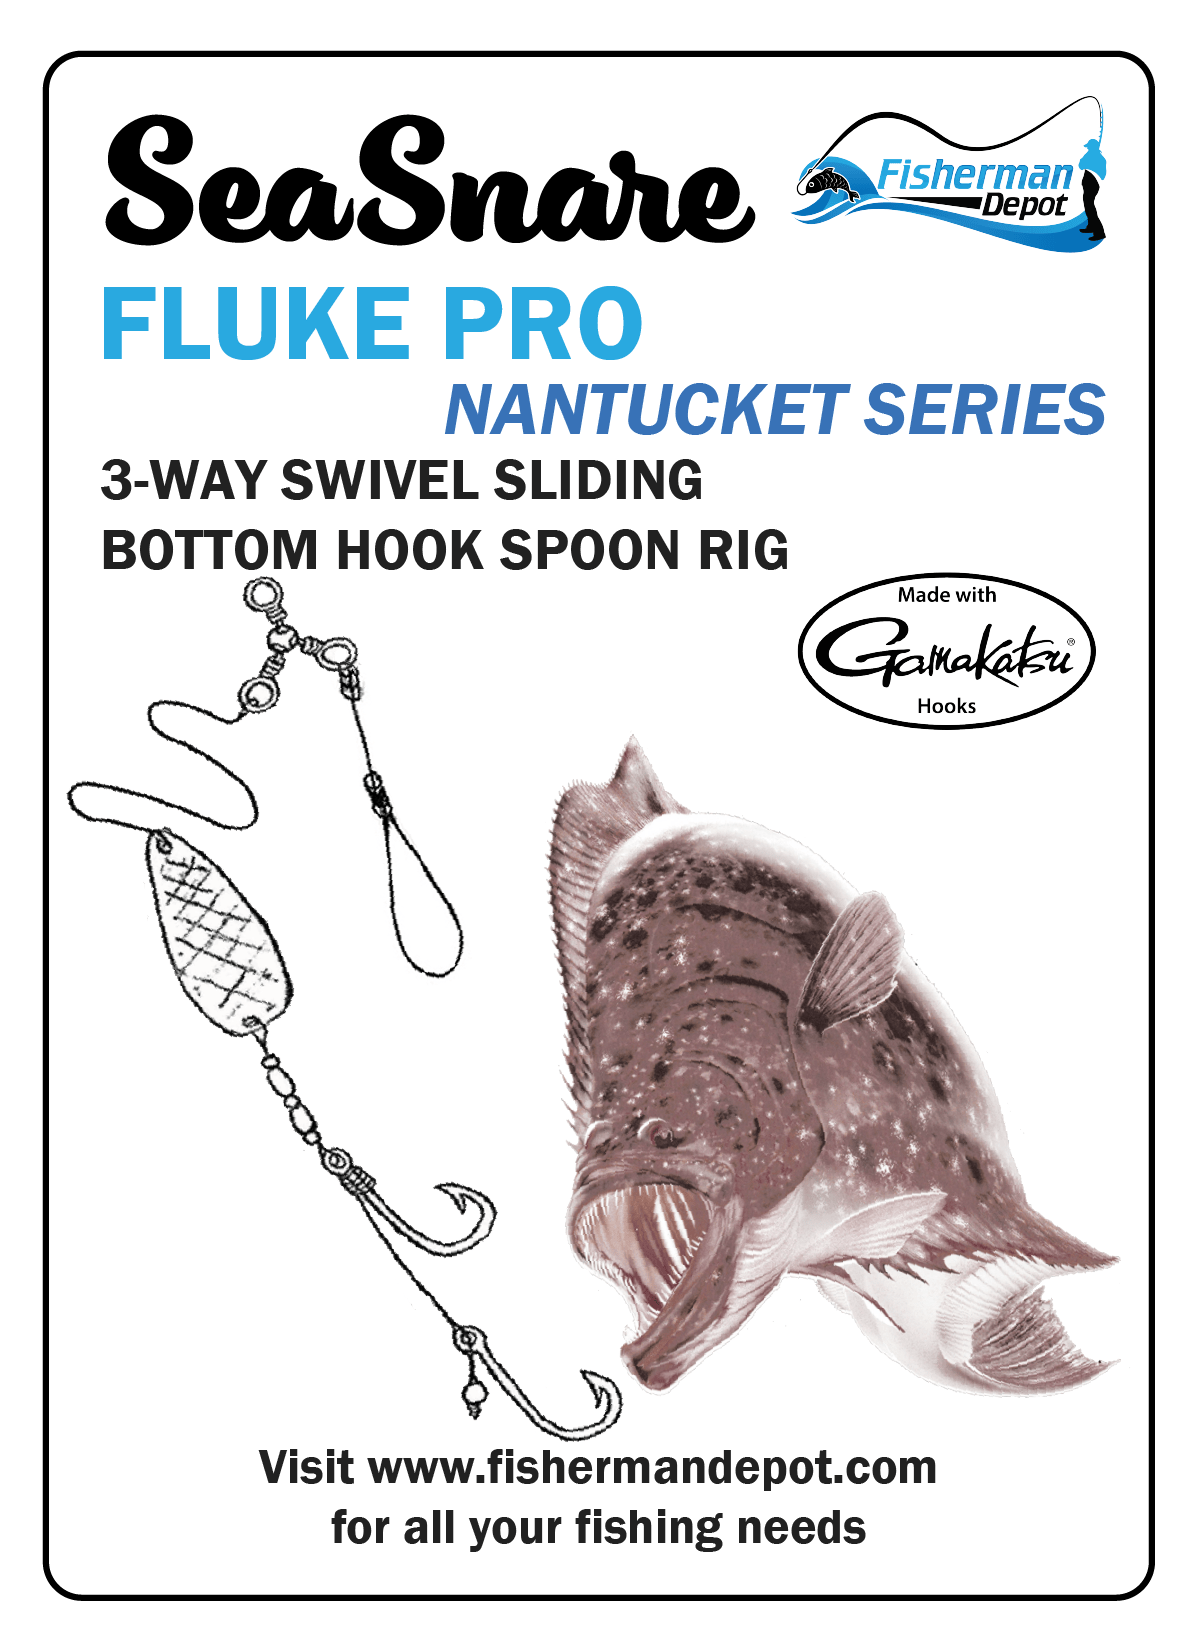 SeaSnare Fluke Pro - Original 3-Way Swivel Sliding Bottom Hook Spoon Rig Nantucket Series